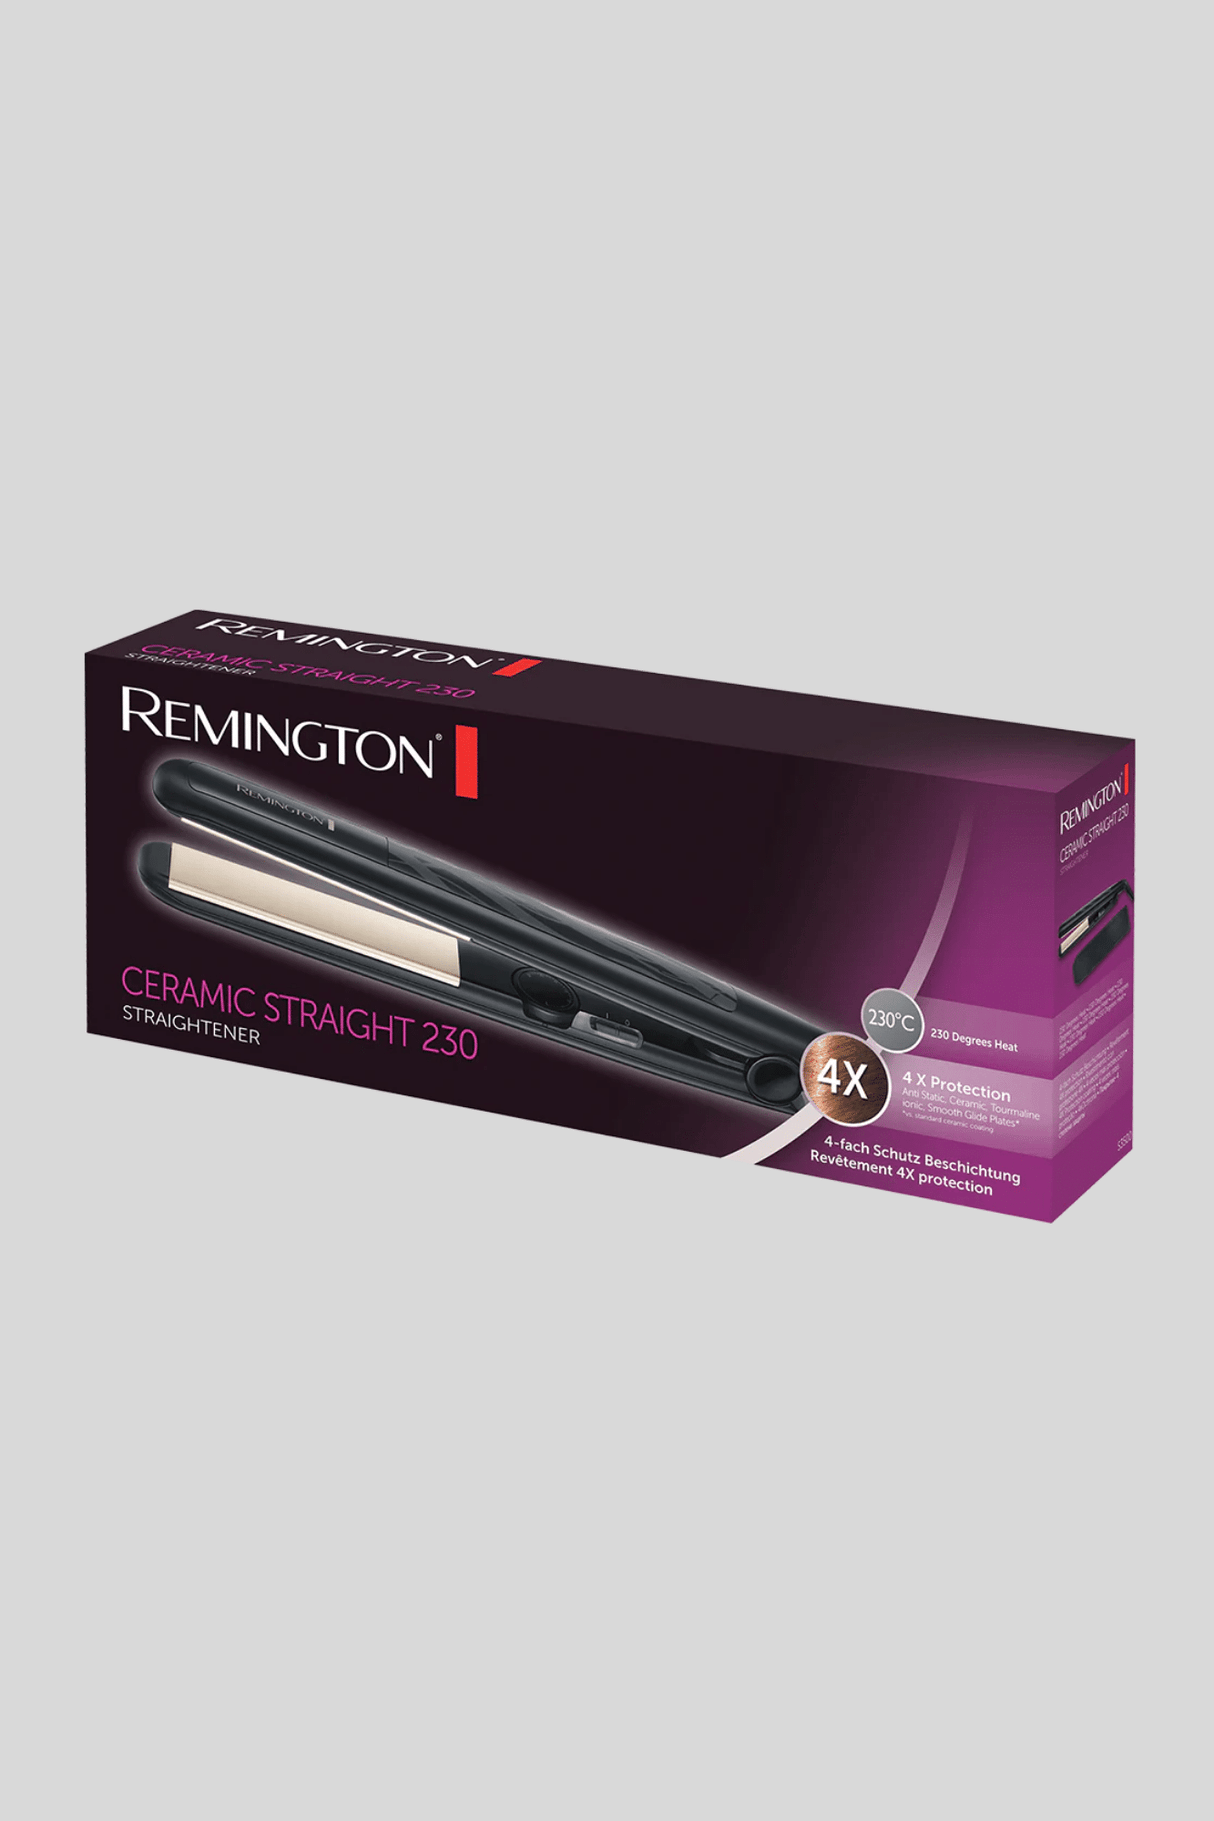 remington straightner s3500